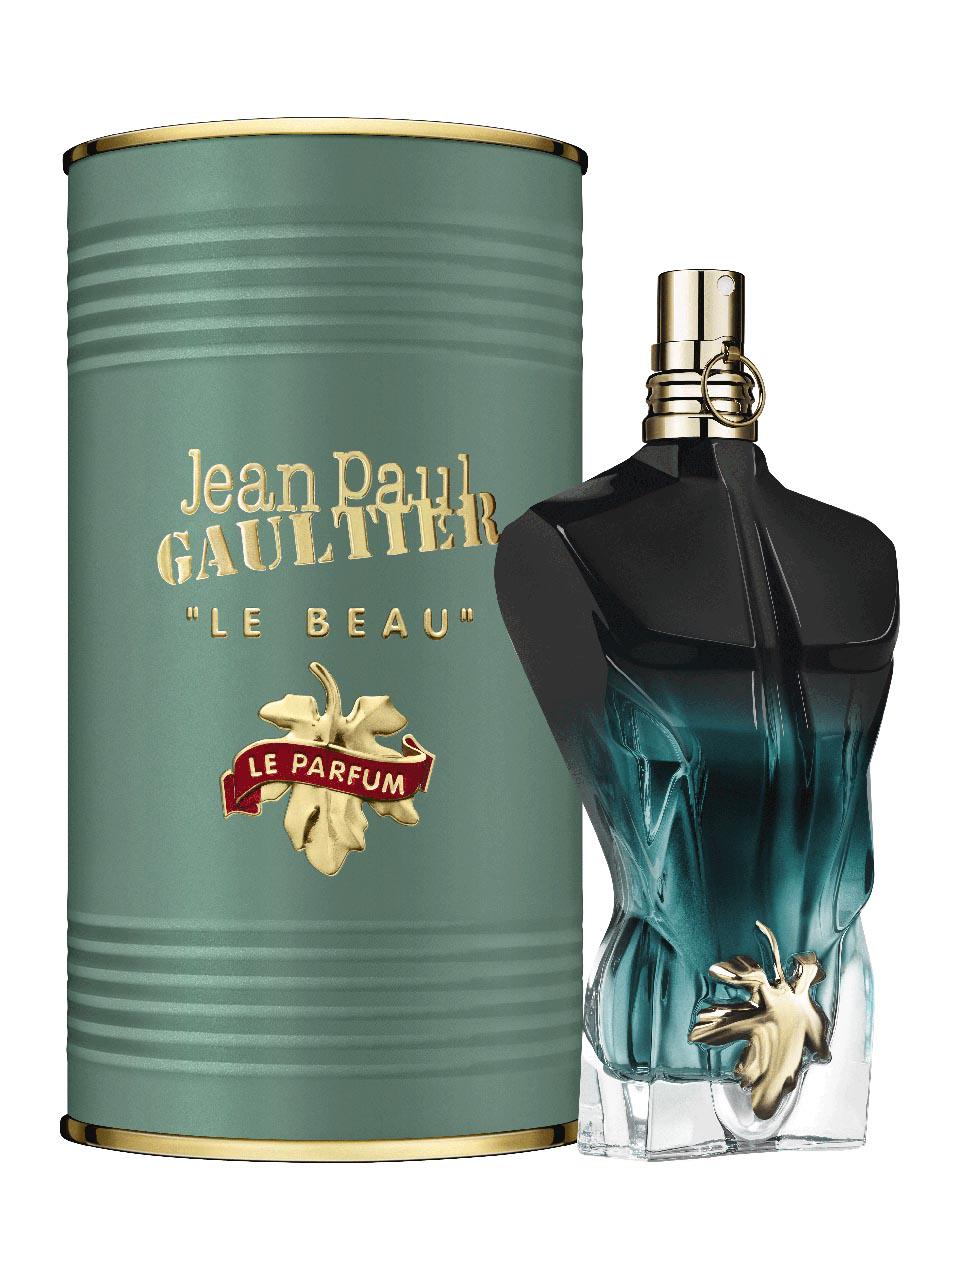 Jean Paul Gaultier Le Beau Eau de Parfum Intense 75 ml | Frankfurt ...